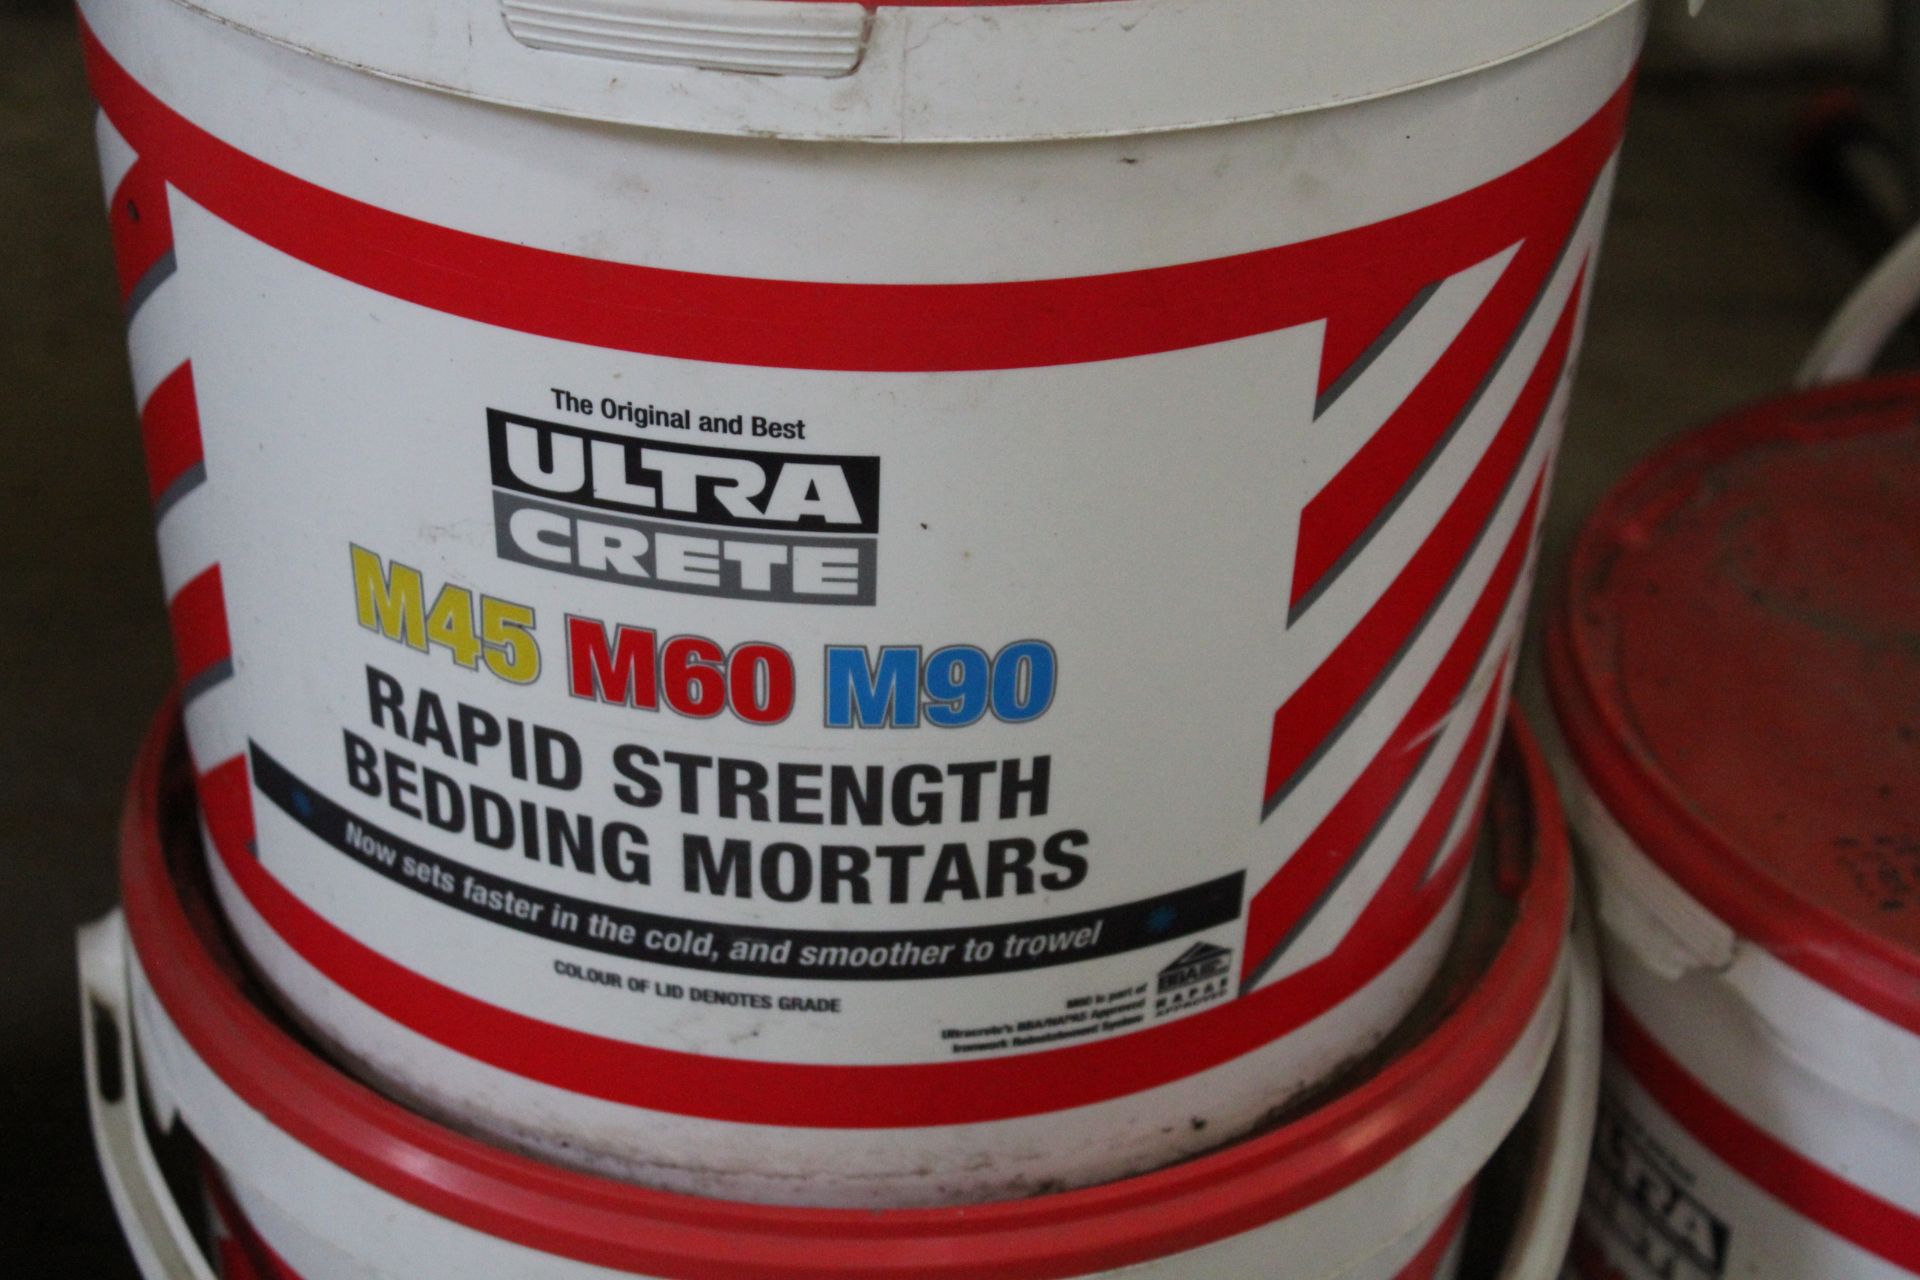 3x buckets of Ultra Crete rapid strength bedding mortar. - Image 2 of 2